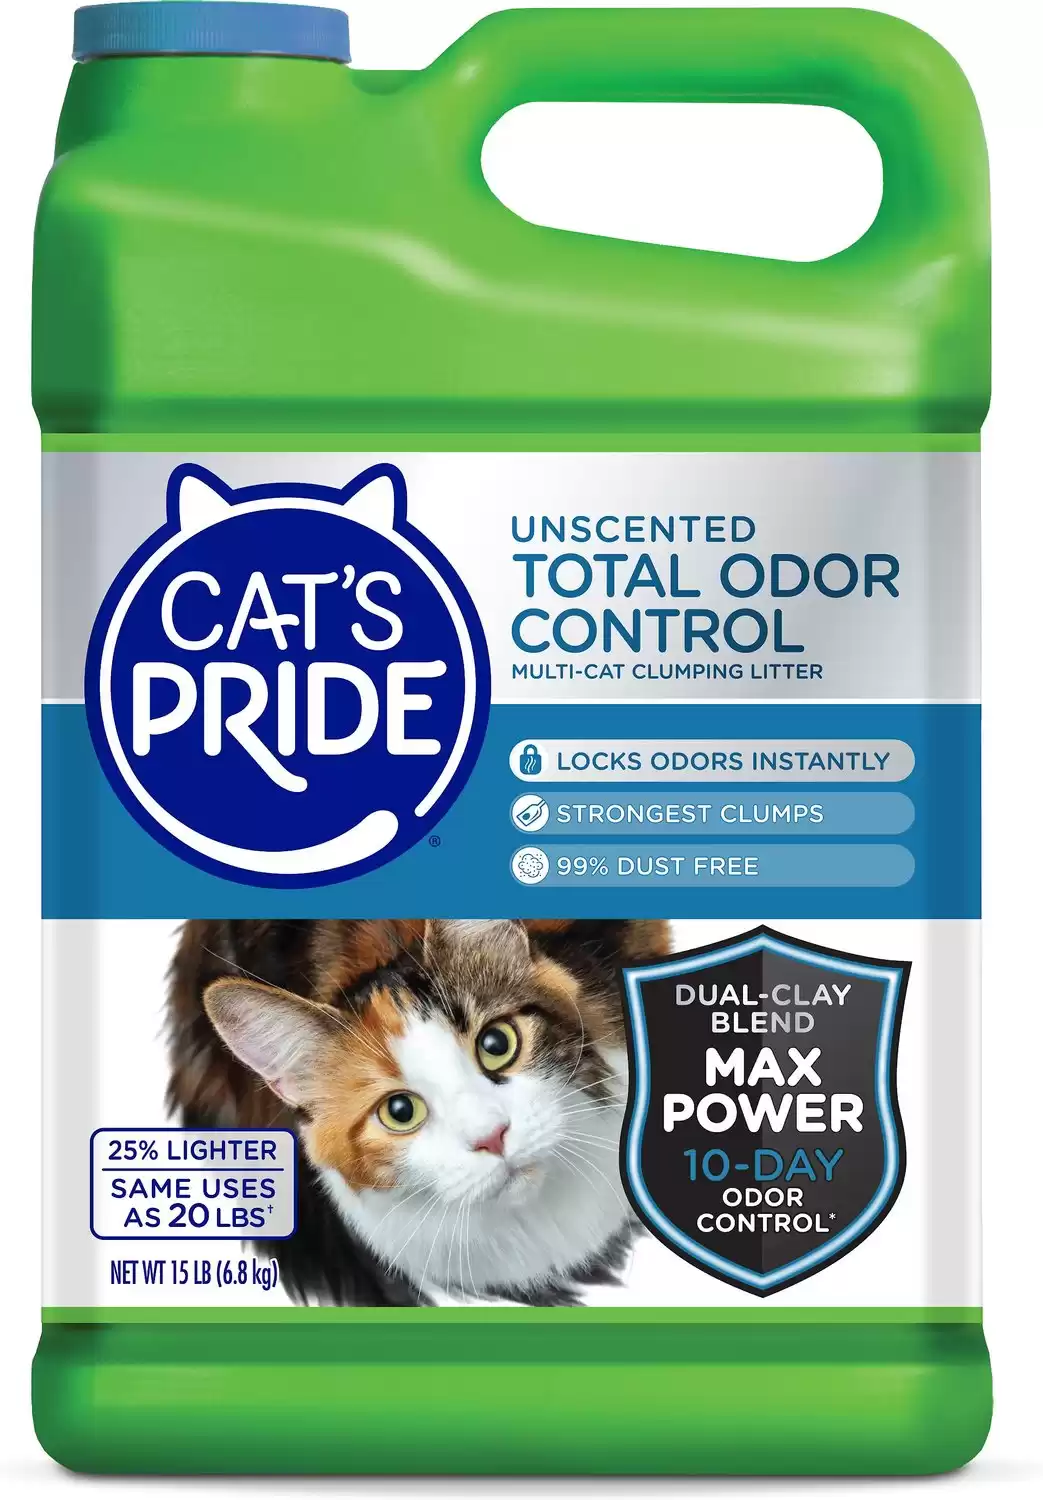 Cat's Pride Total Odor Control